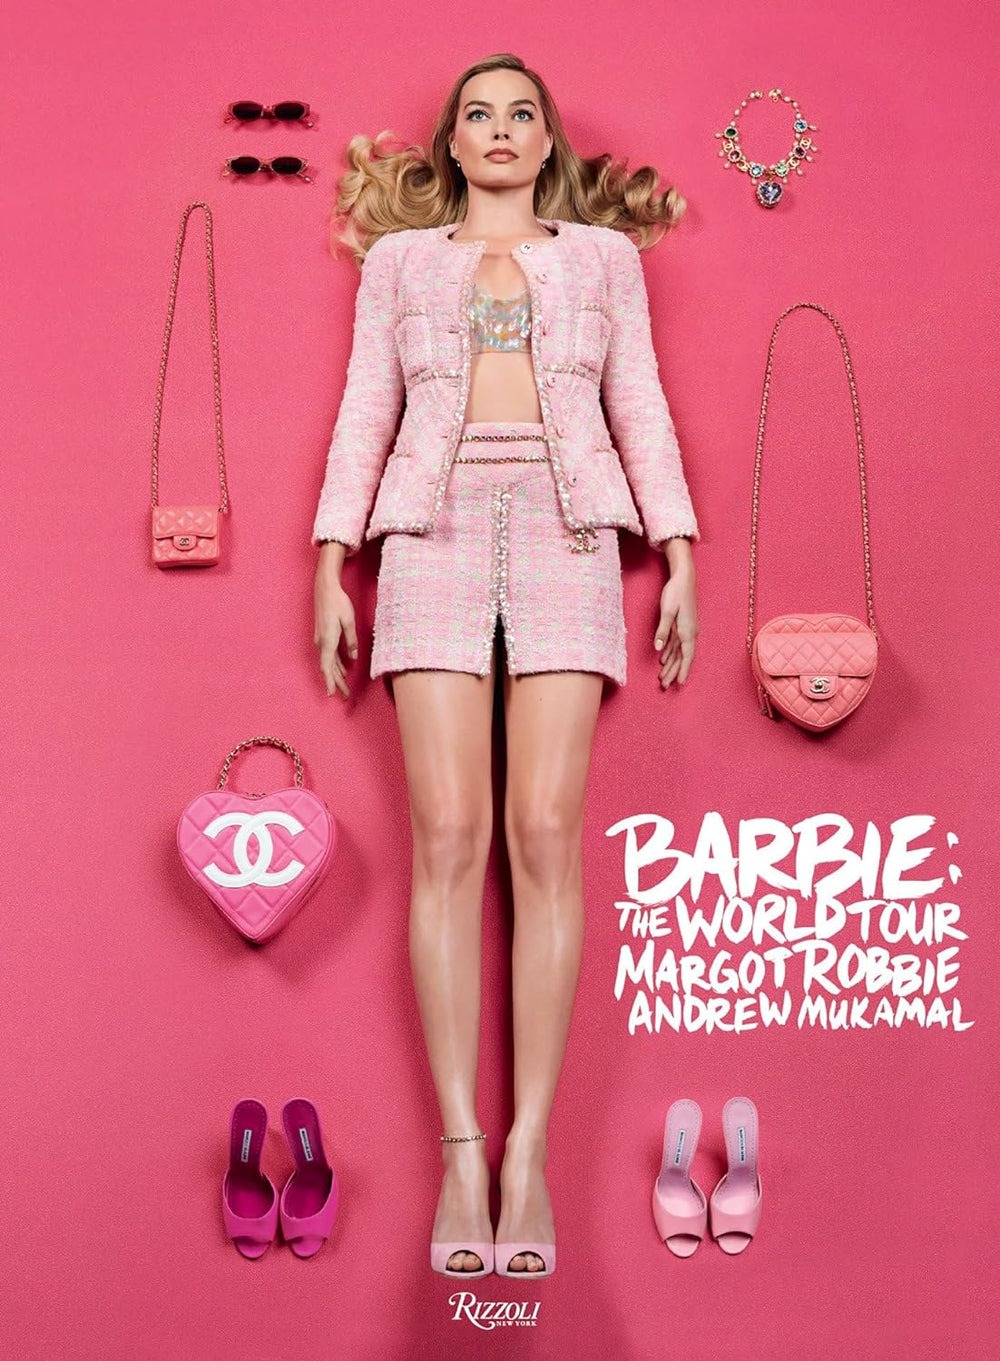 Barbie: The World Tour by Margot Robbie